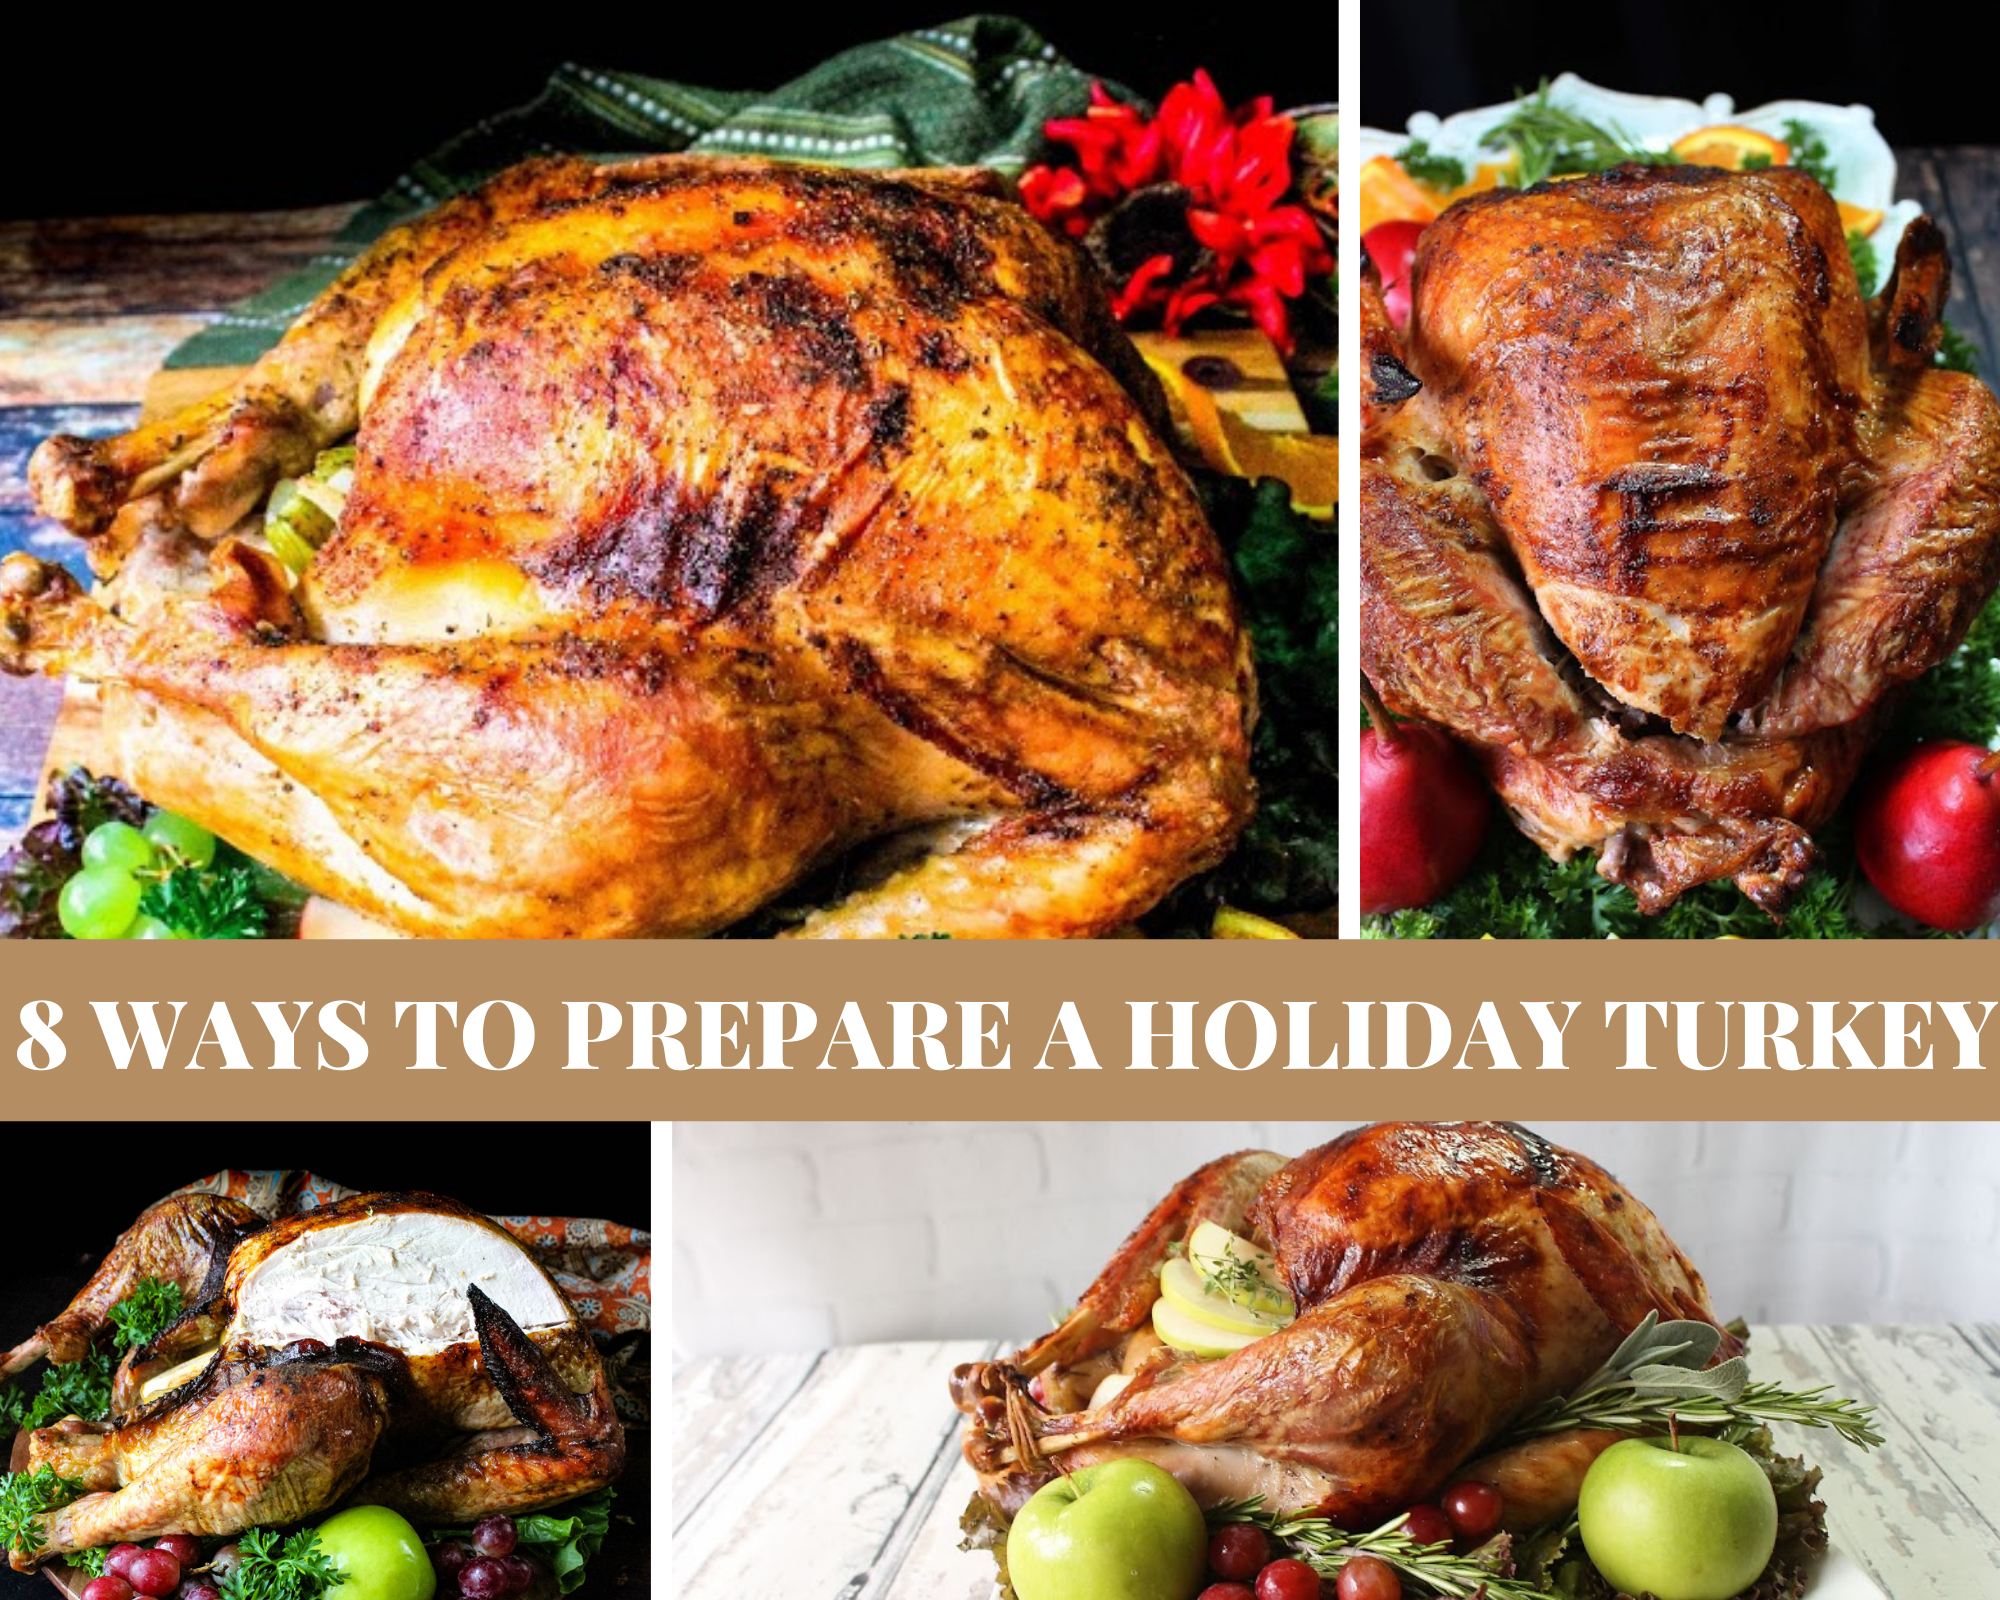 8 Ways To Prepare a Holiday Turkey